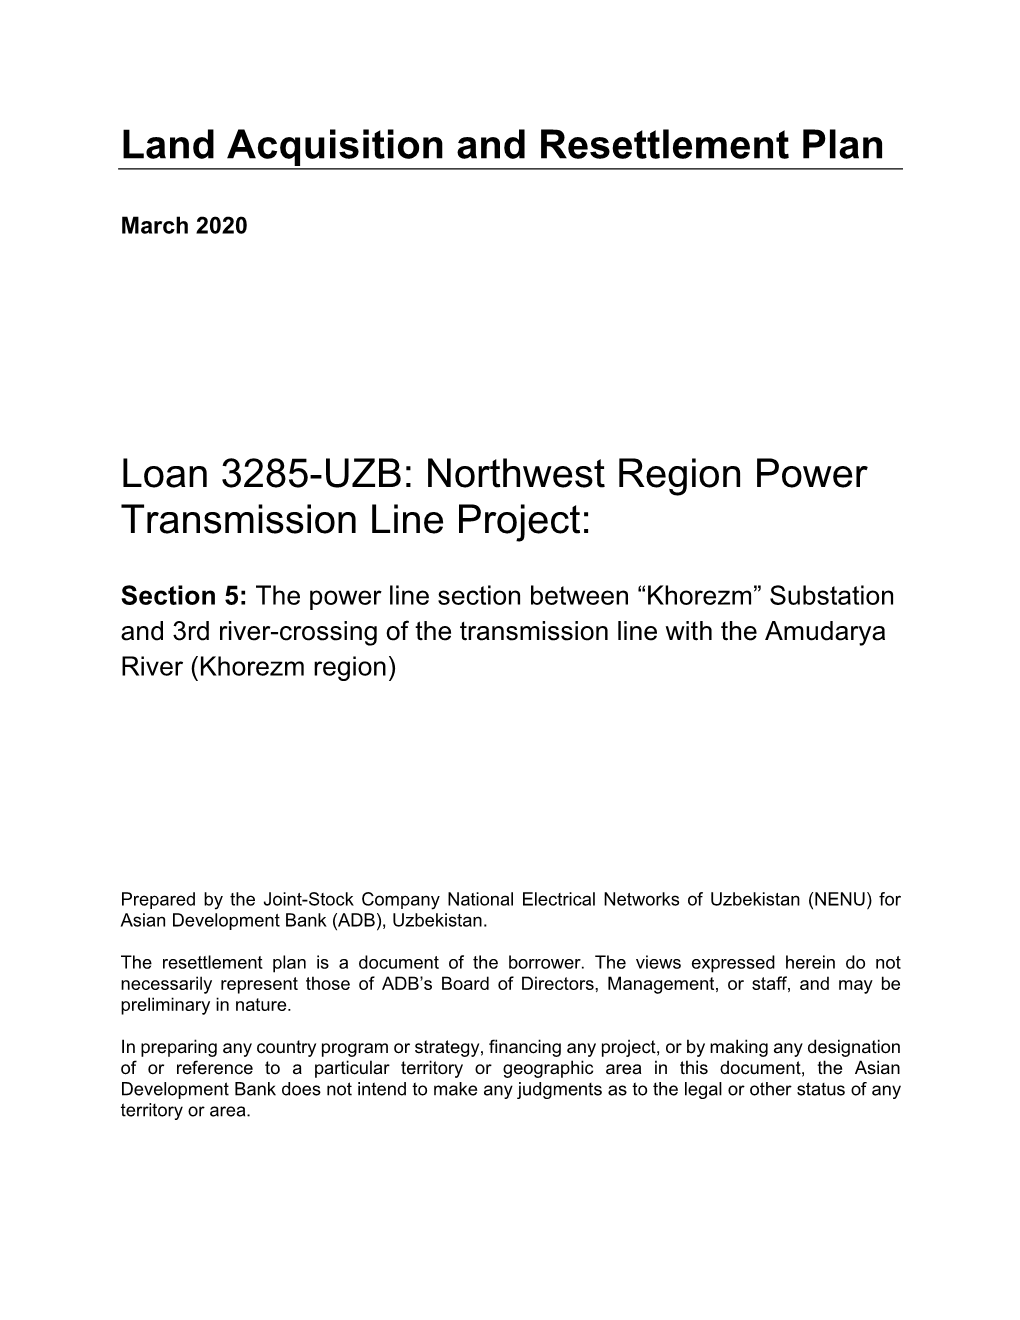 Northwest Region Power Transmission Line Project